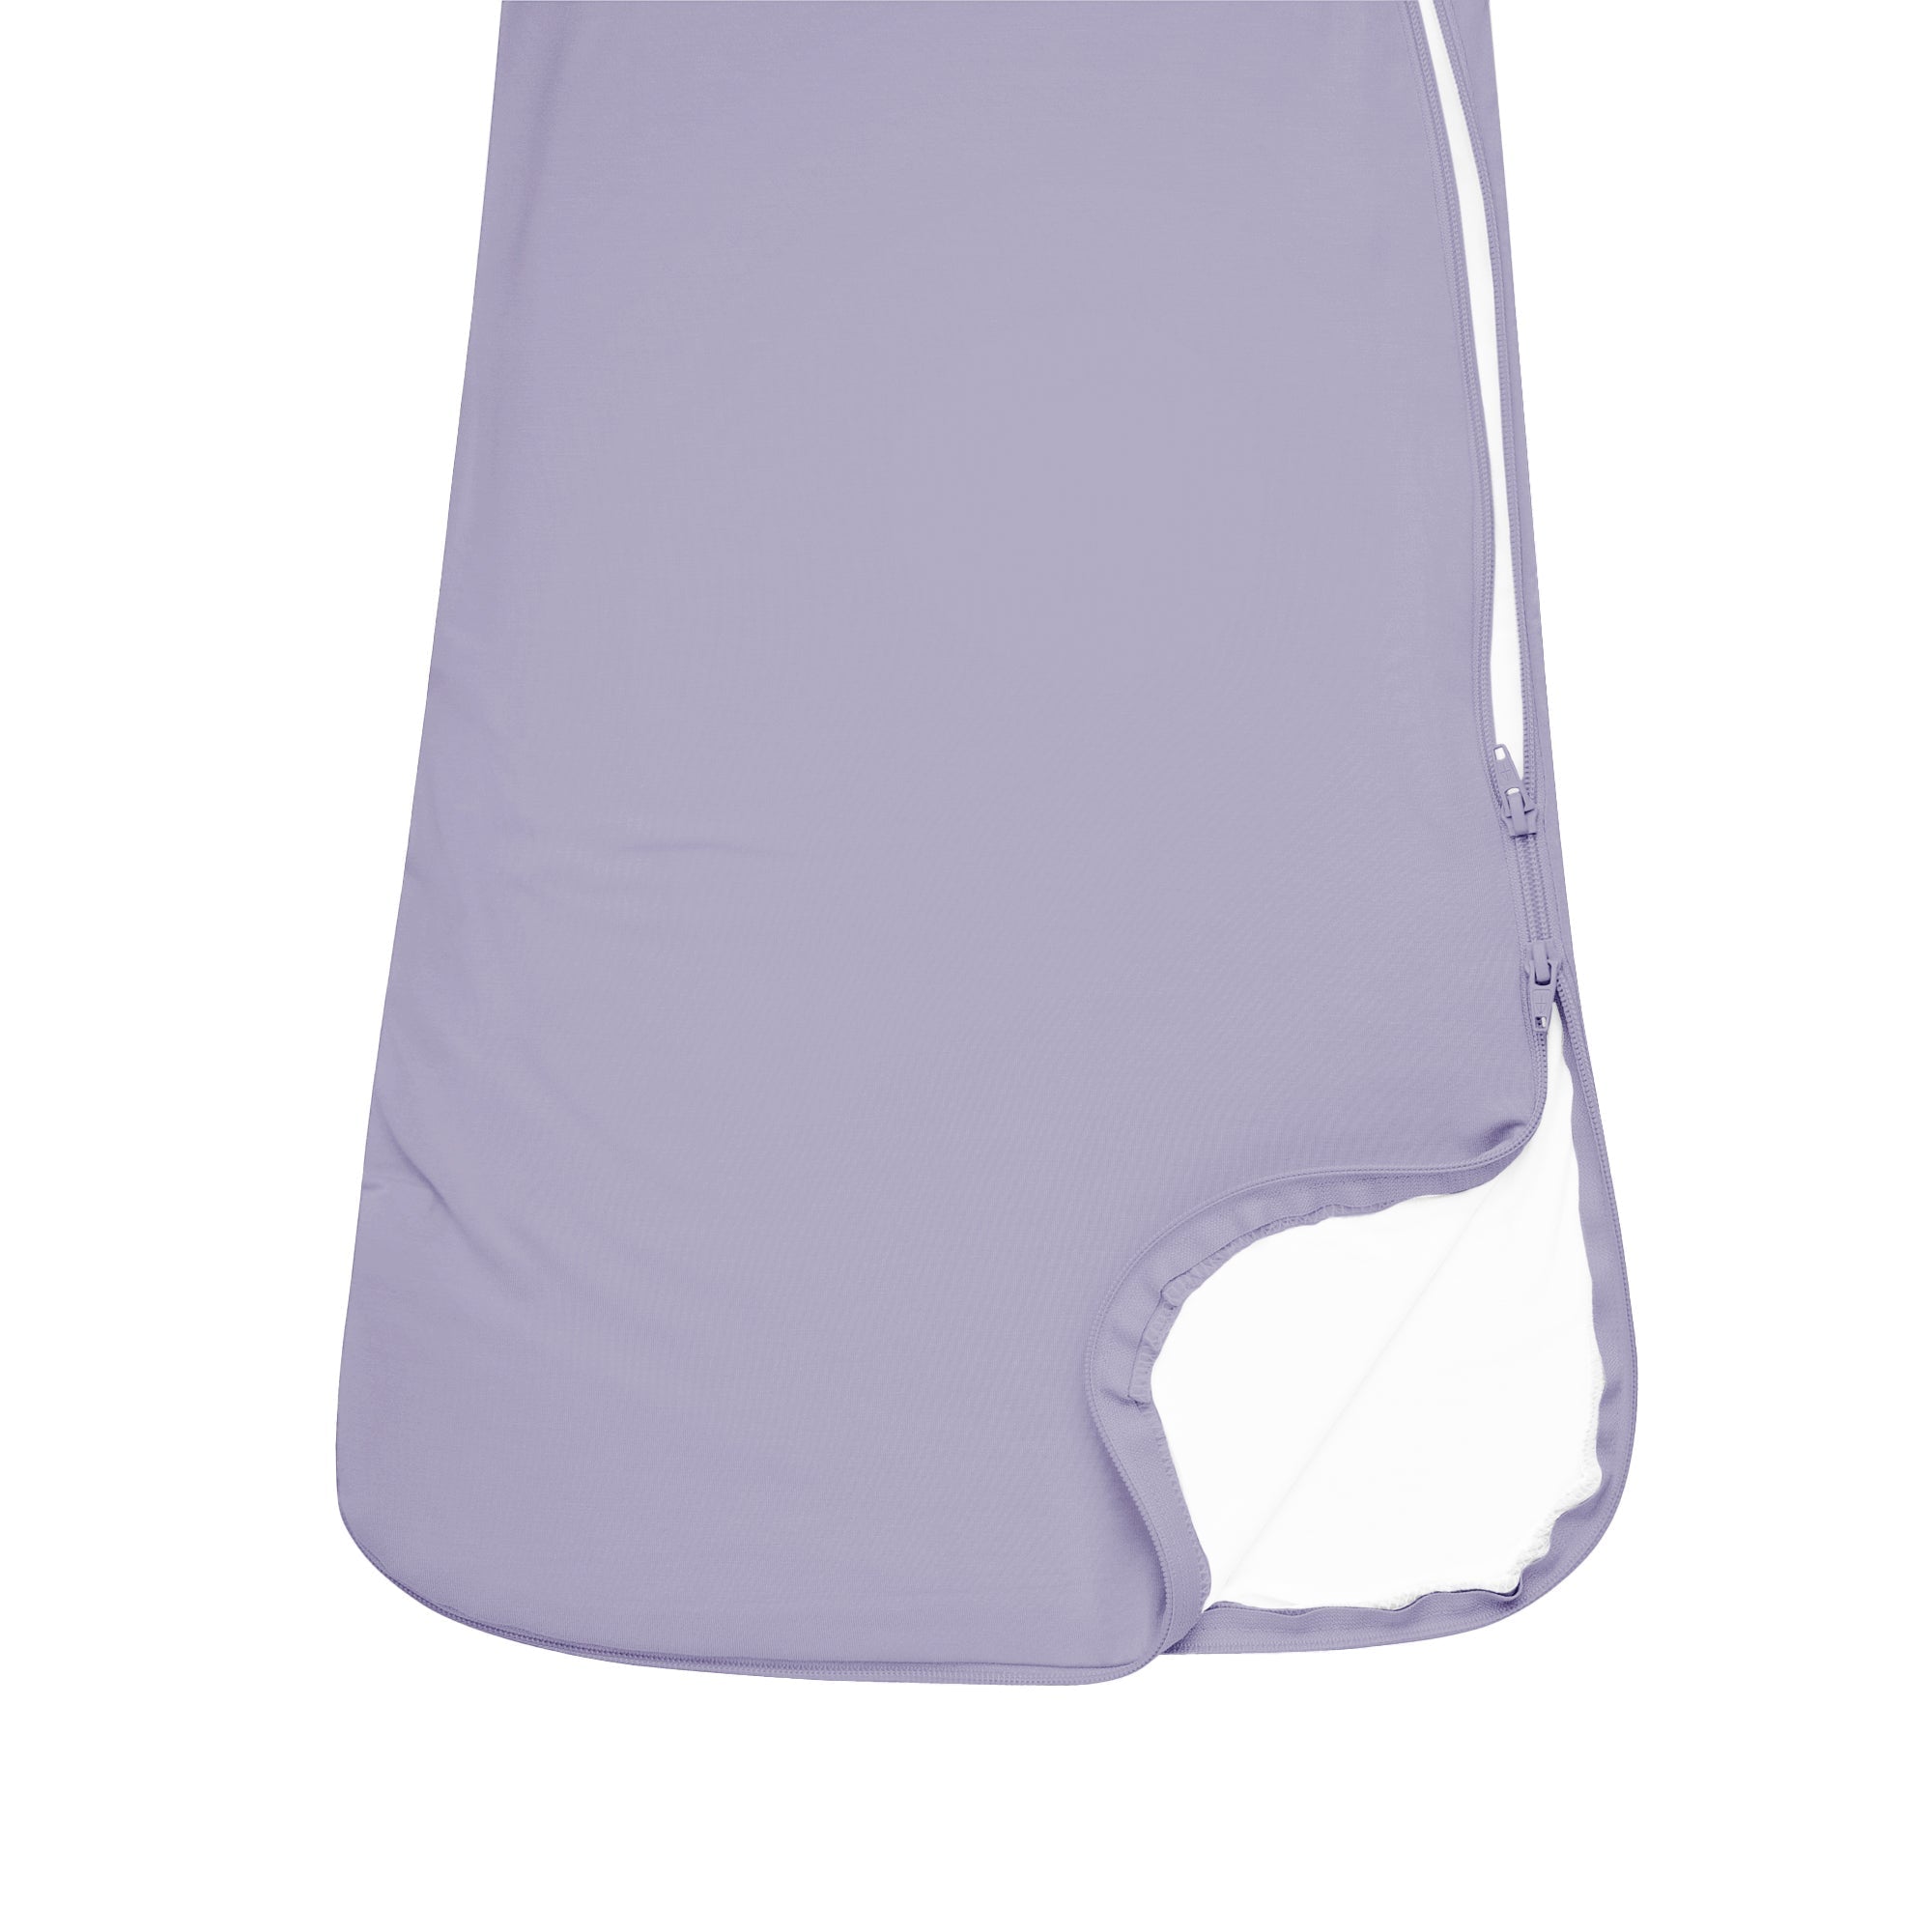 Kyte Baby bamboo Sleep Bag in Taro 0.5 double zipper